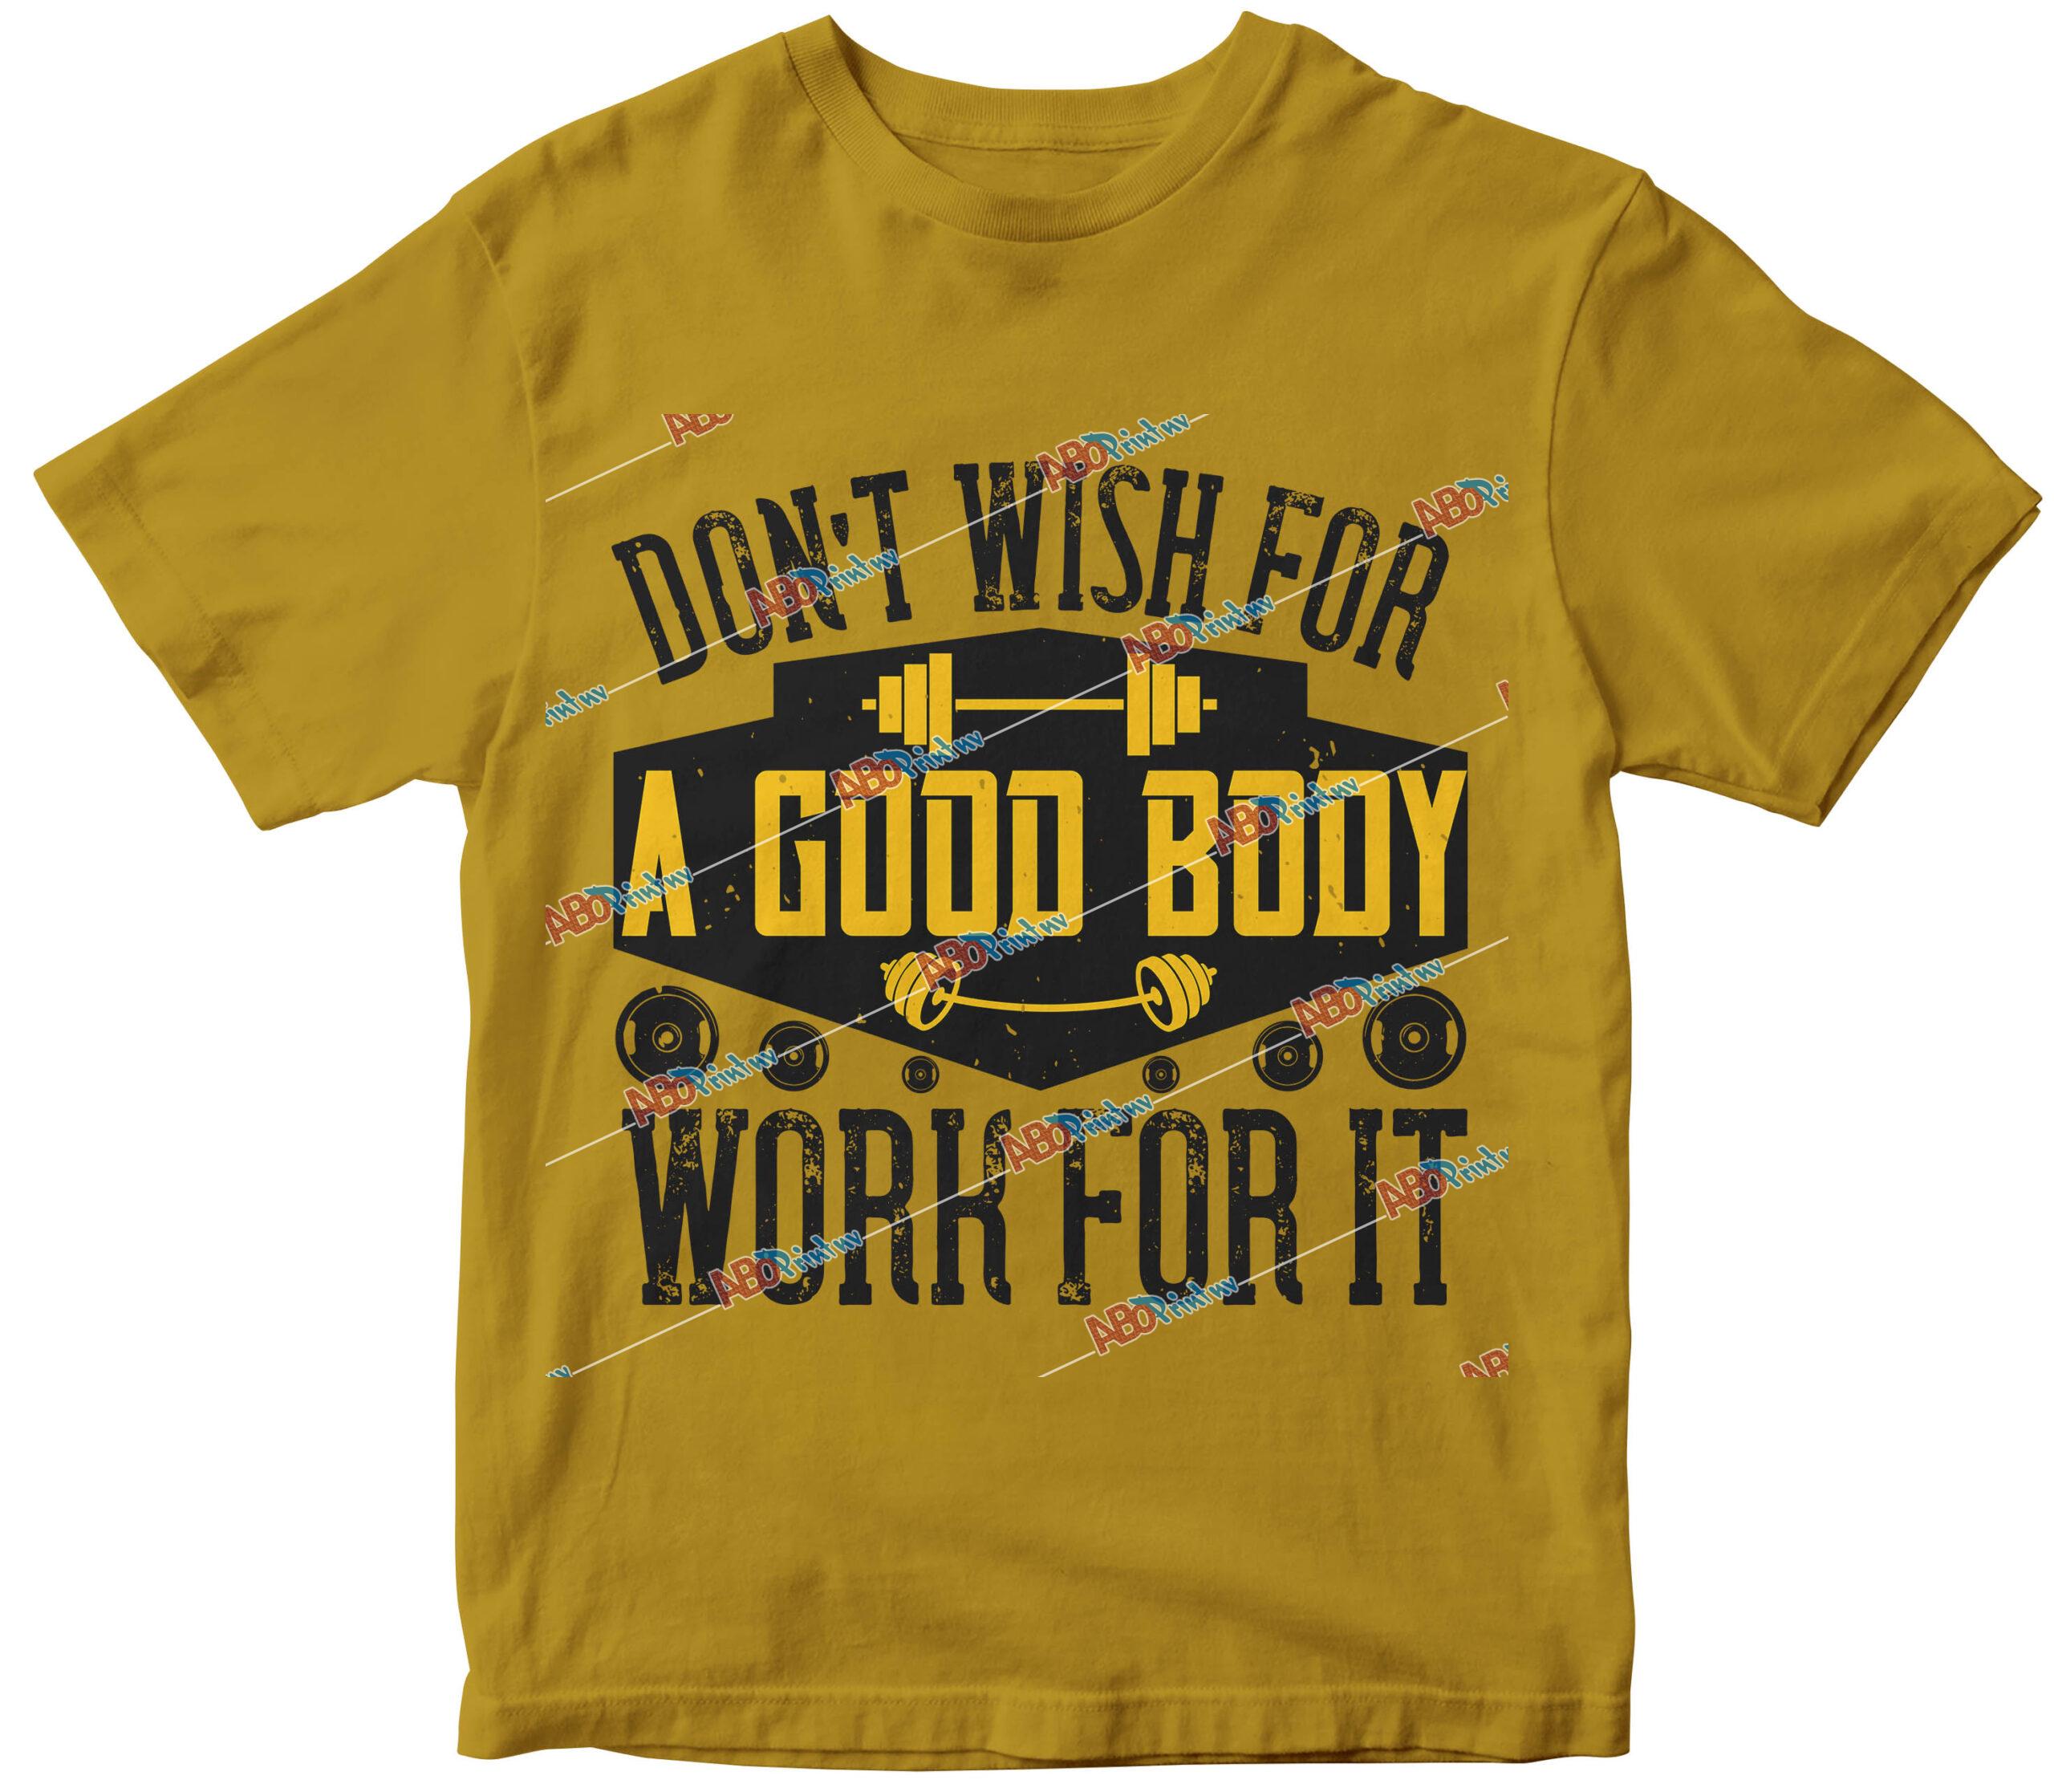 DonÔÇÖt wish for a good body, work for it.jpg